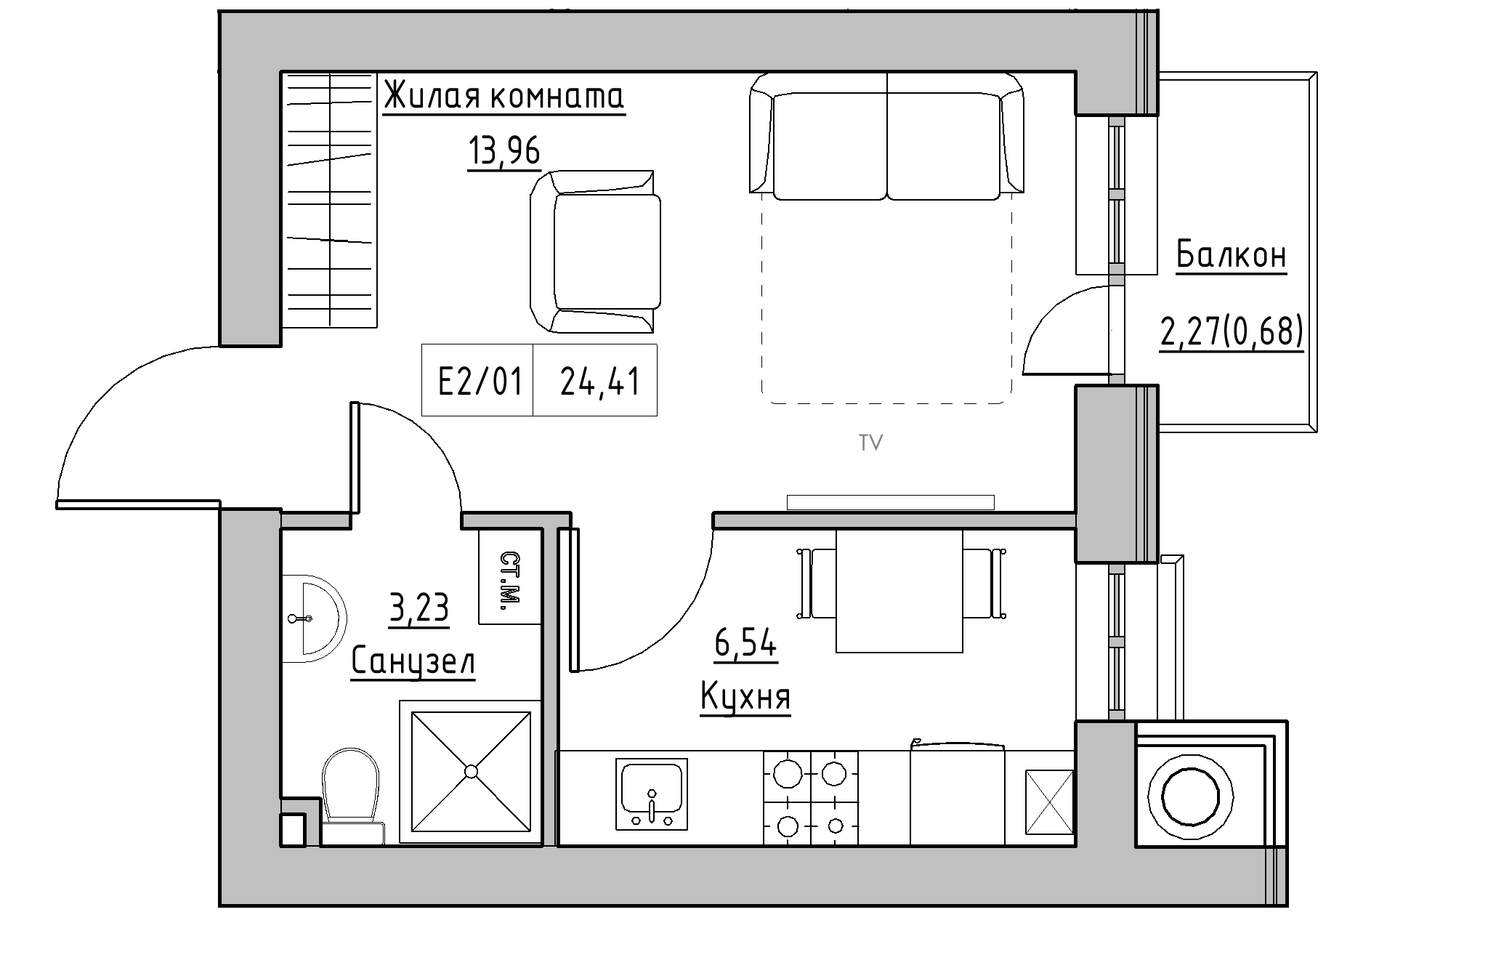 Planning 1-rm flats area 24.41m2, KS-010-04/0009.